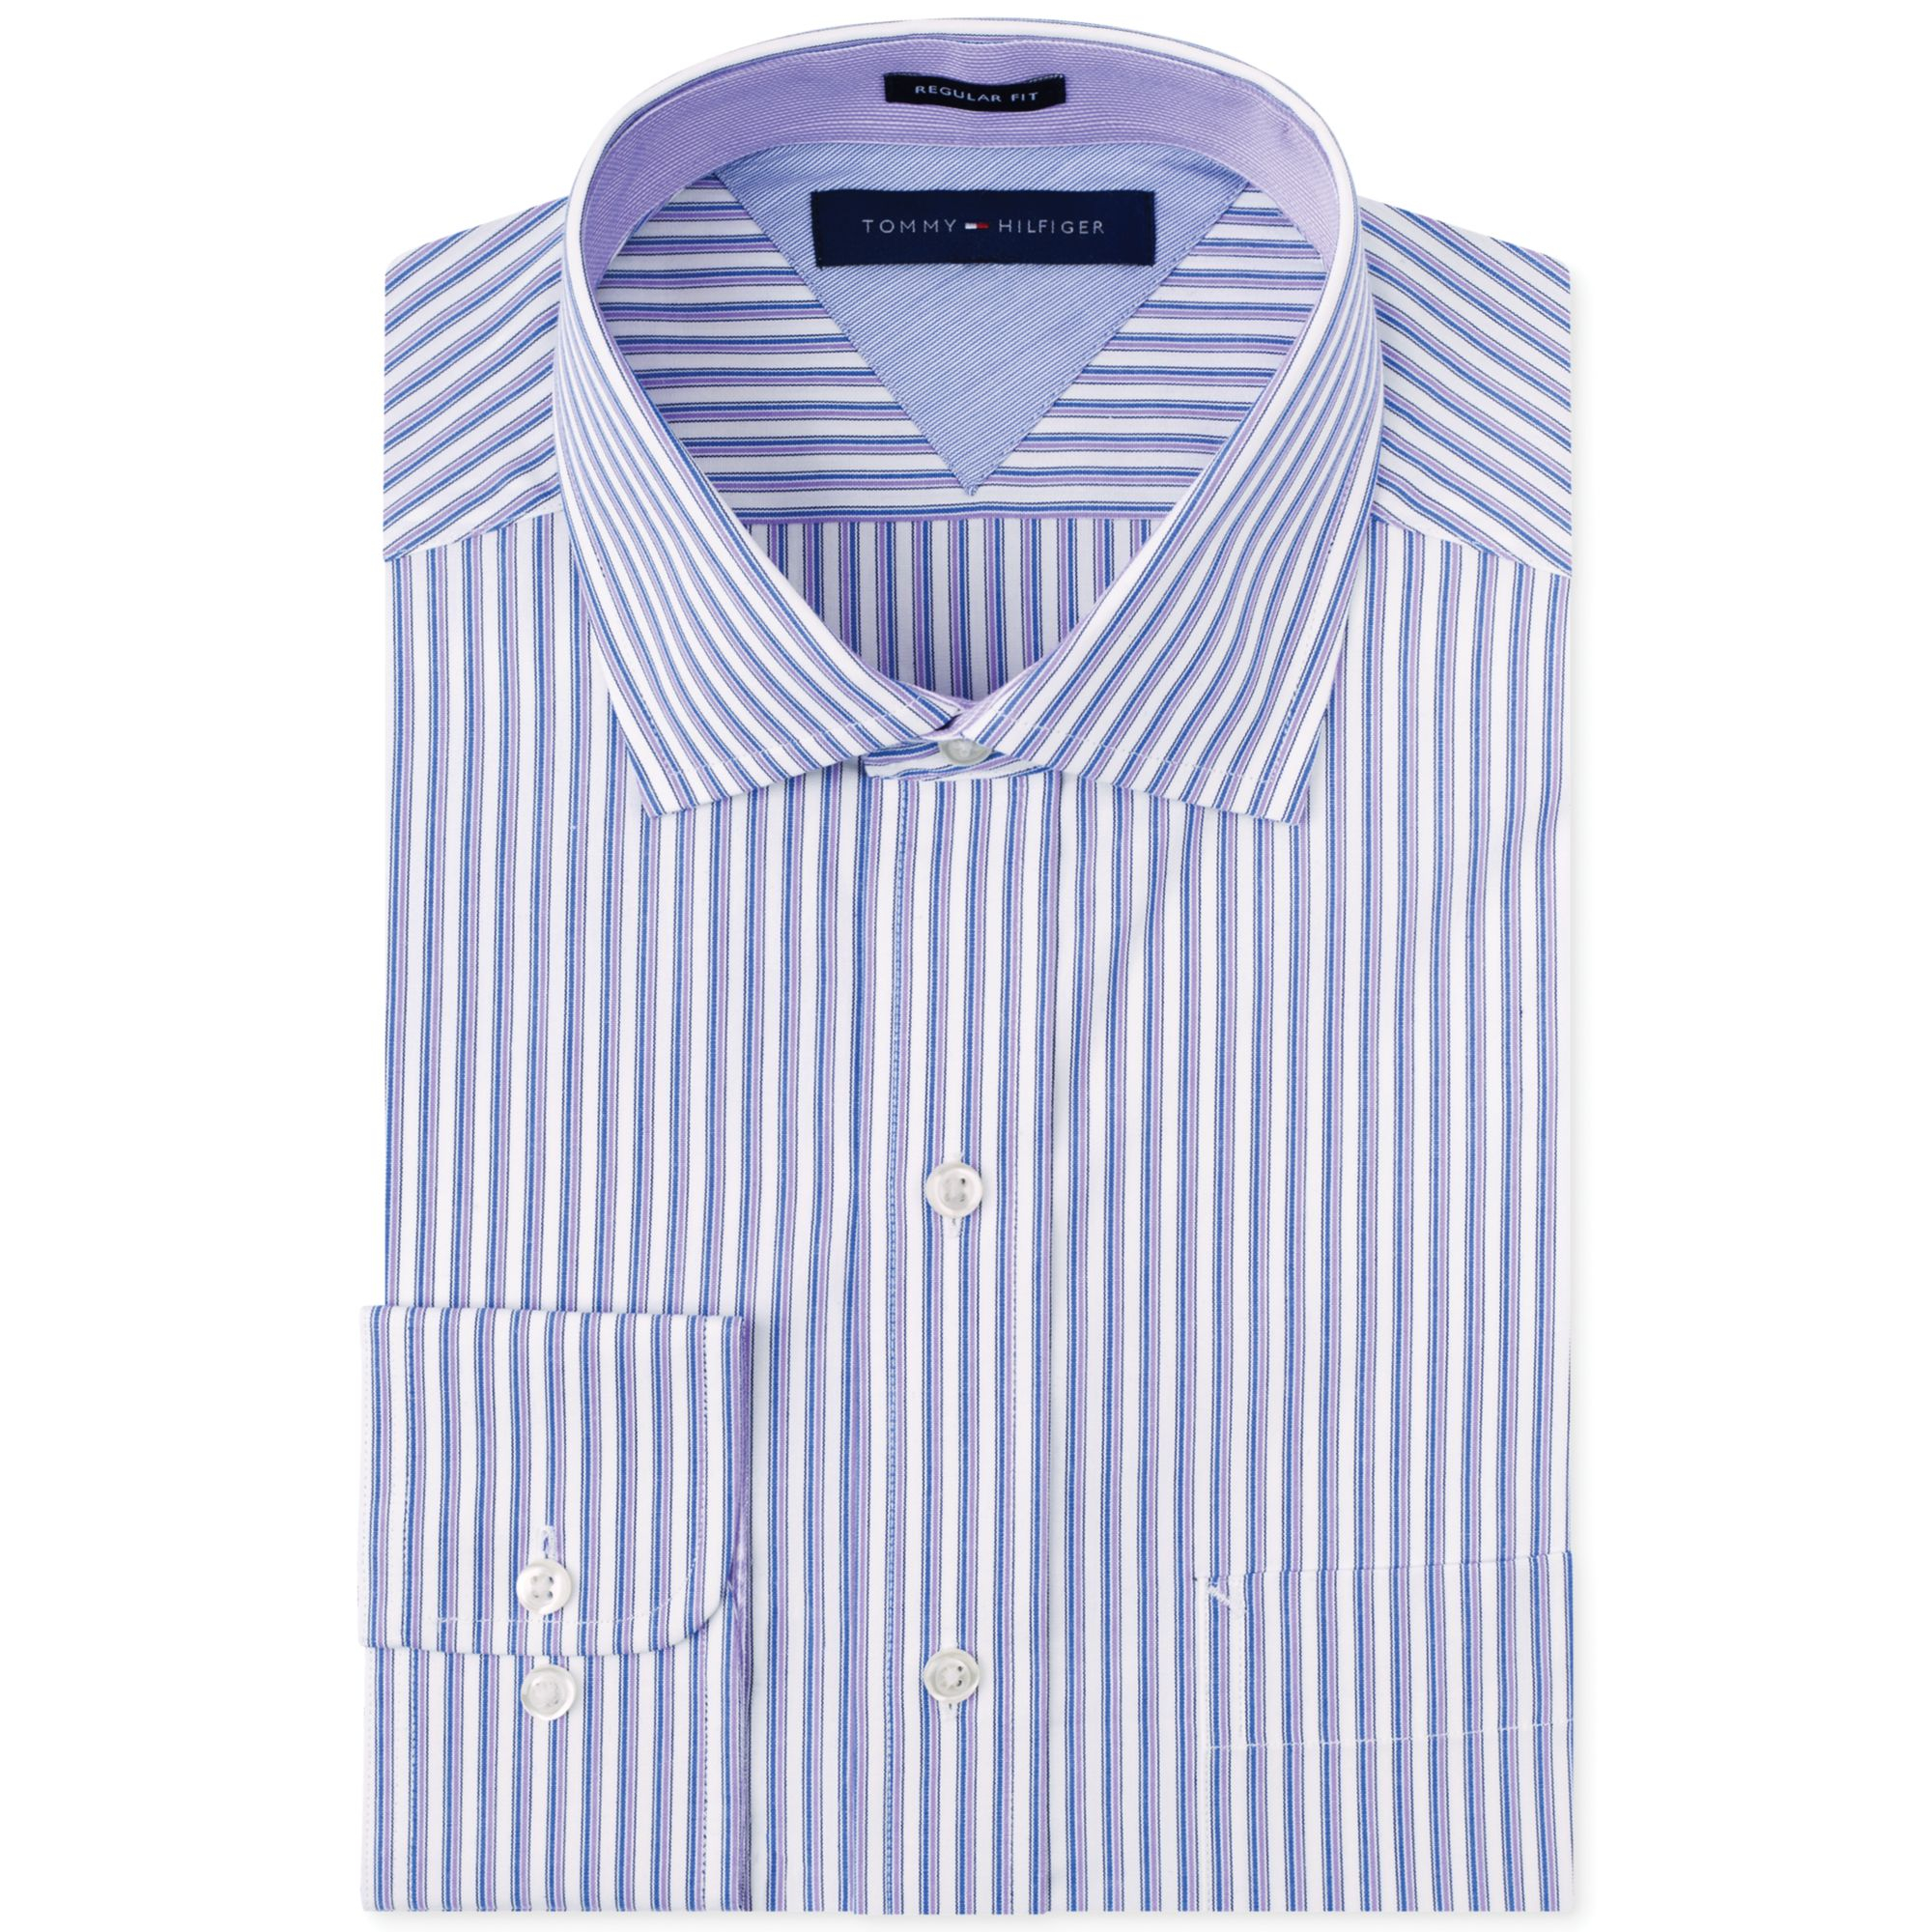 tommy hilfiger striped dress shirt